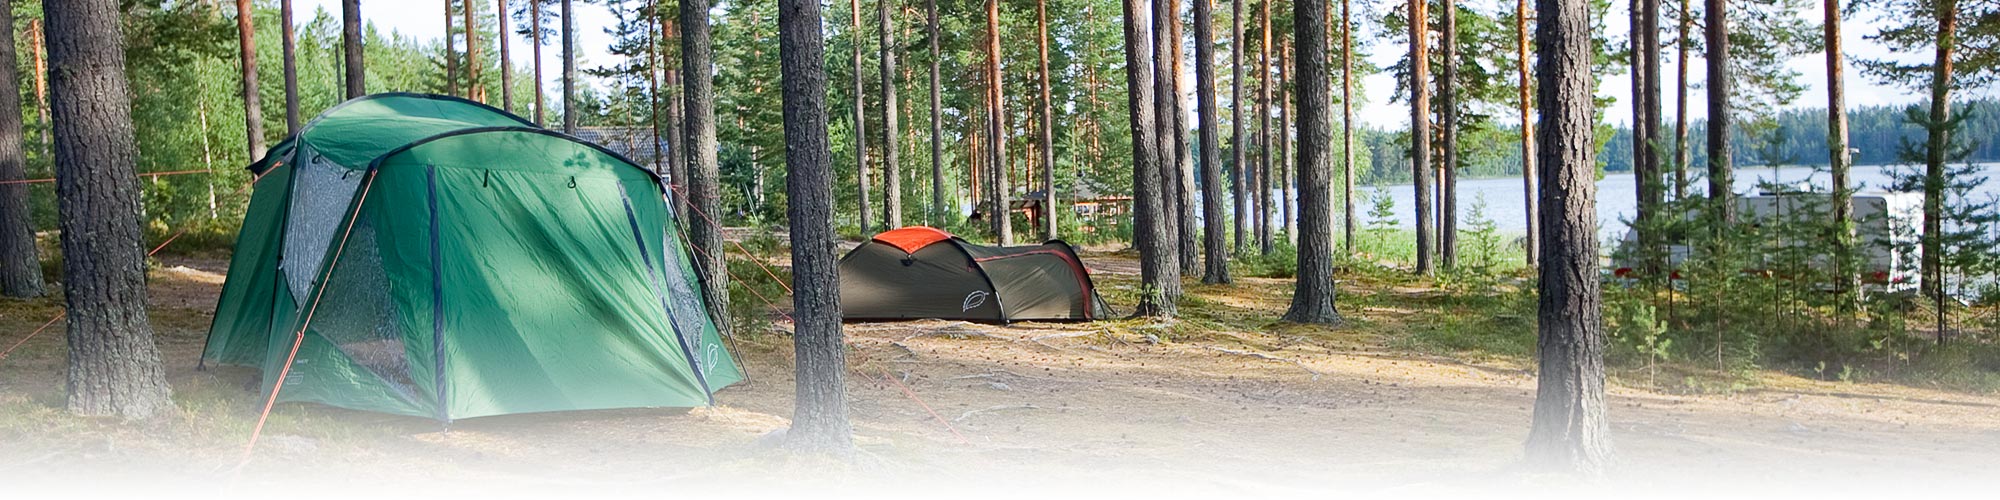 Tommolansalmi campsite tents